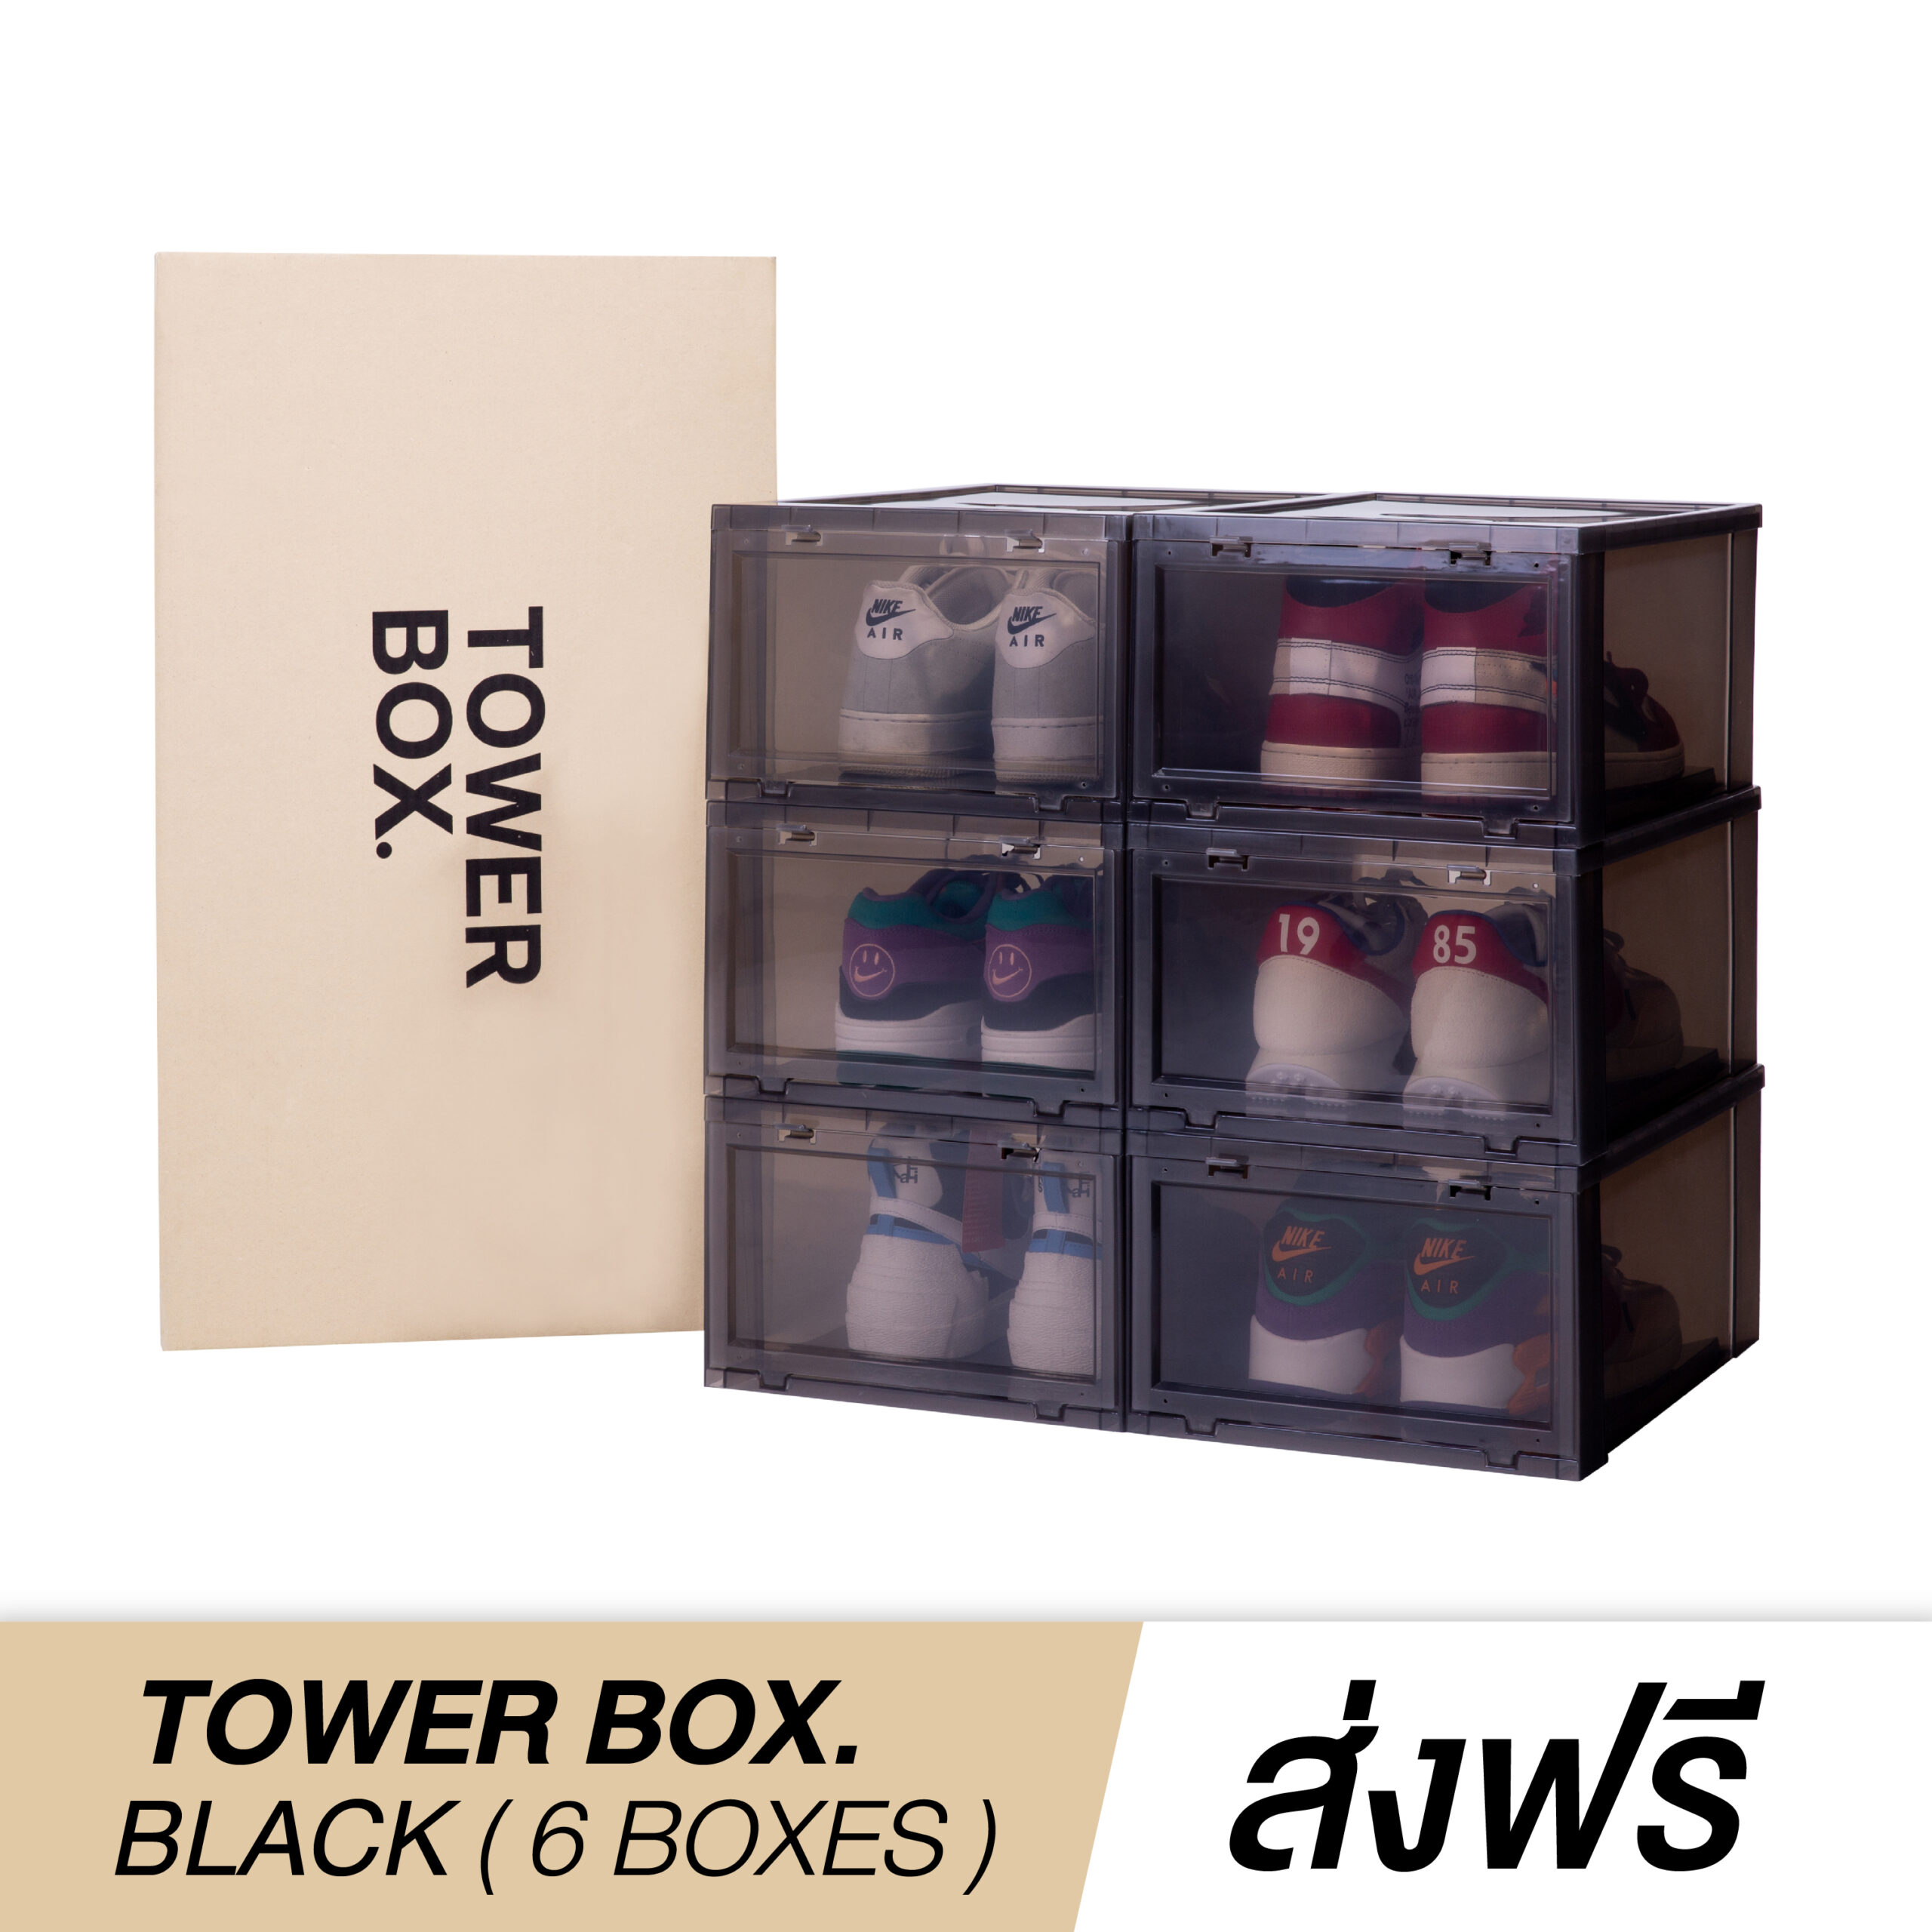 TOWER BOX BLACK (6 BOXES) – Tower Box